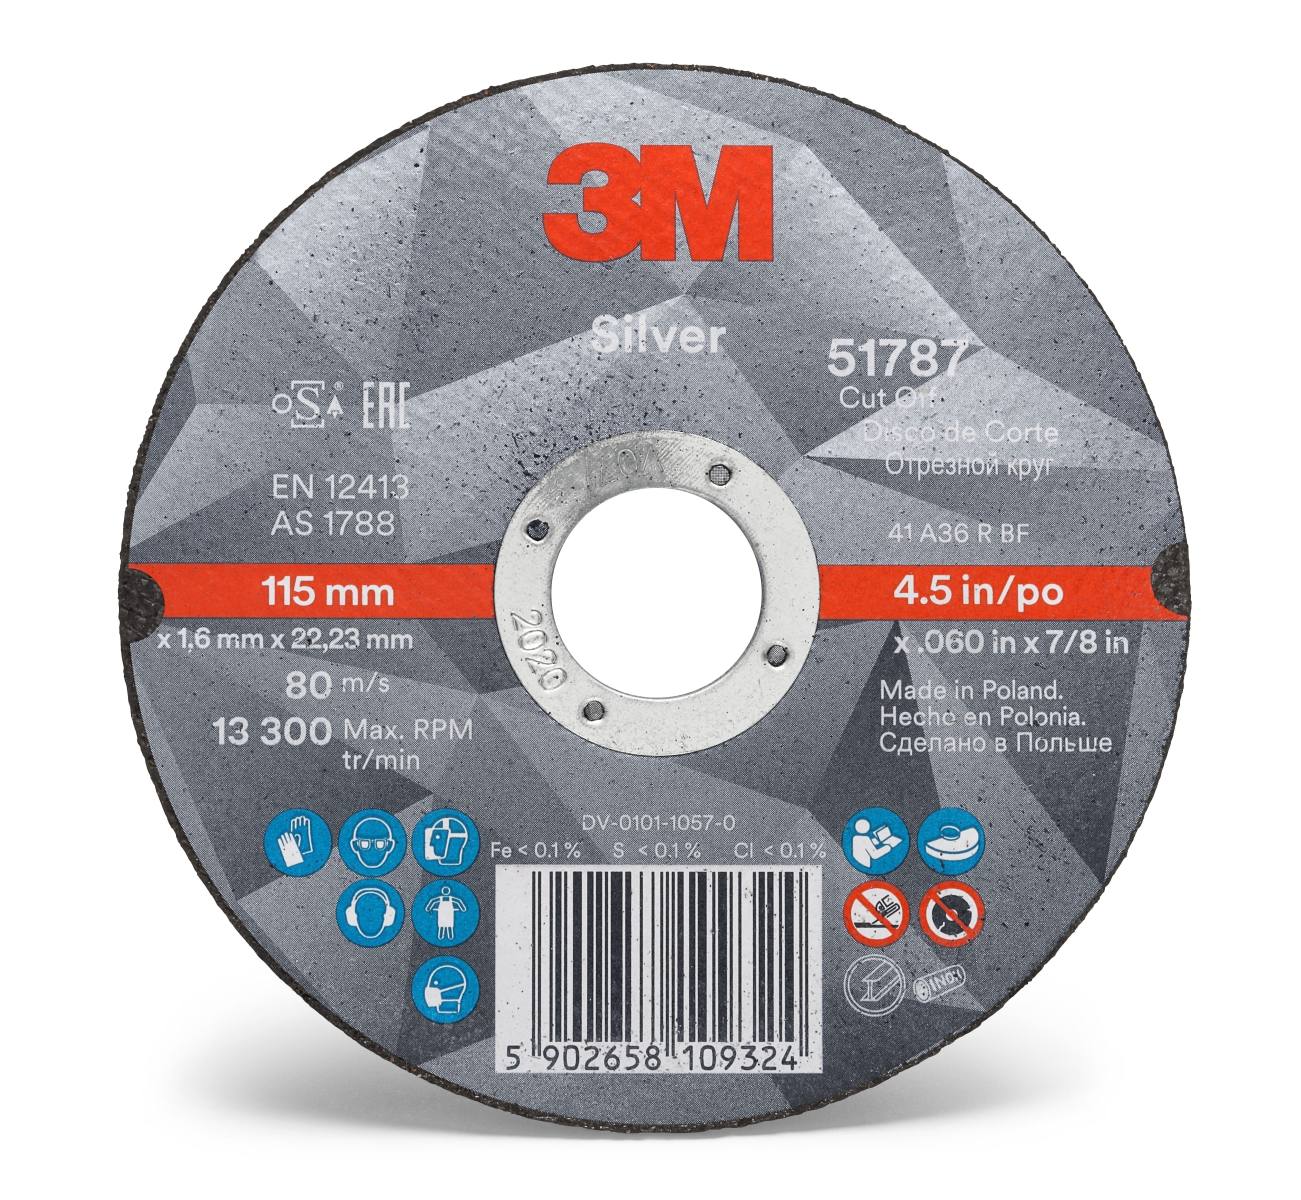 3M Silver Cut-Off Wheel Trennscheibe, 230 mm, 3,0 mm, 22,23 mm, T41, 51806